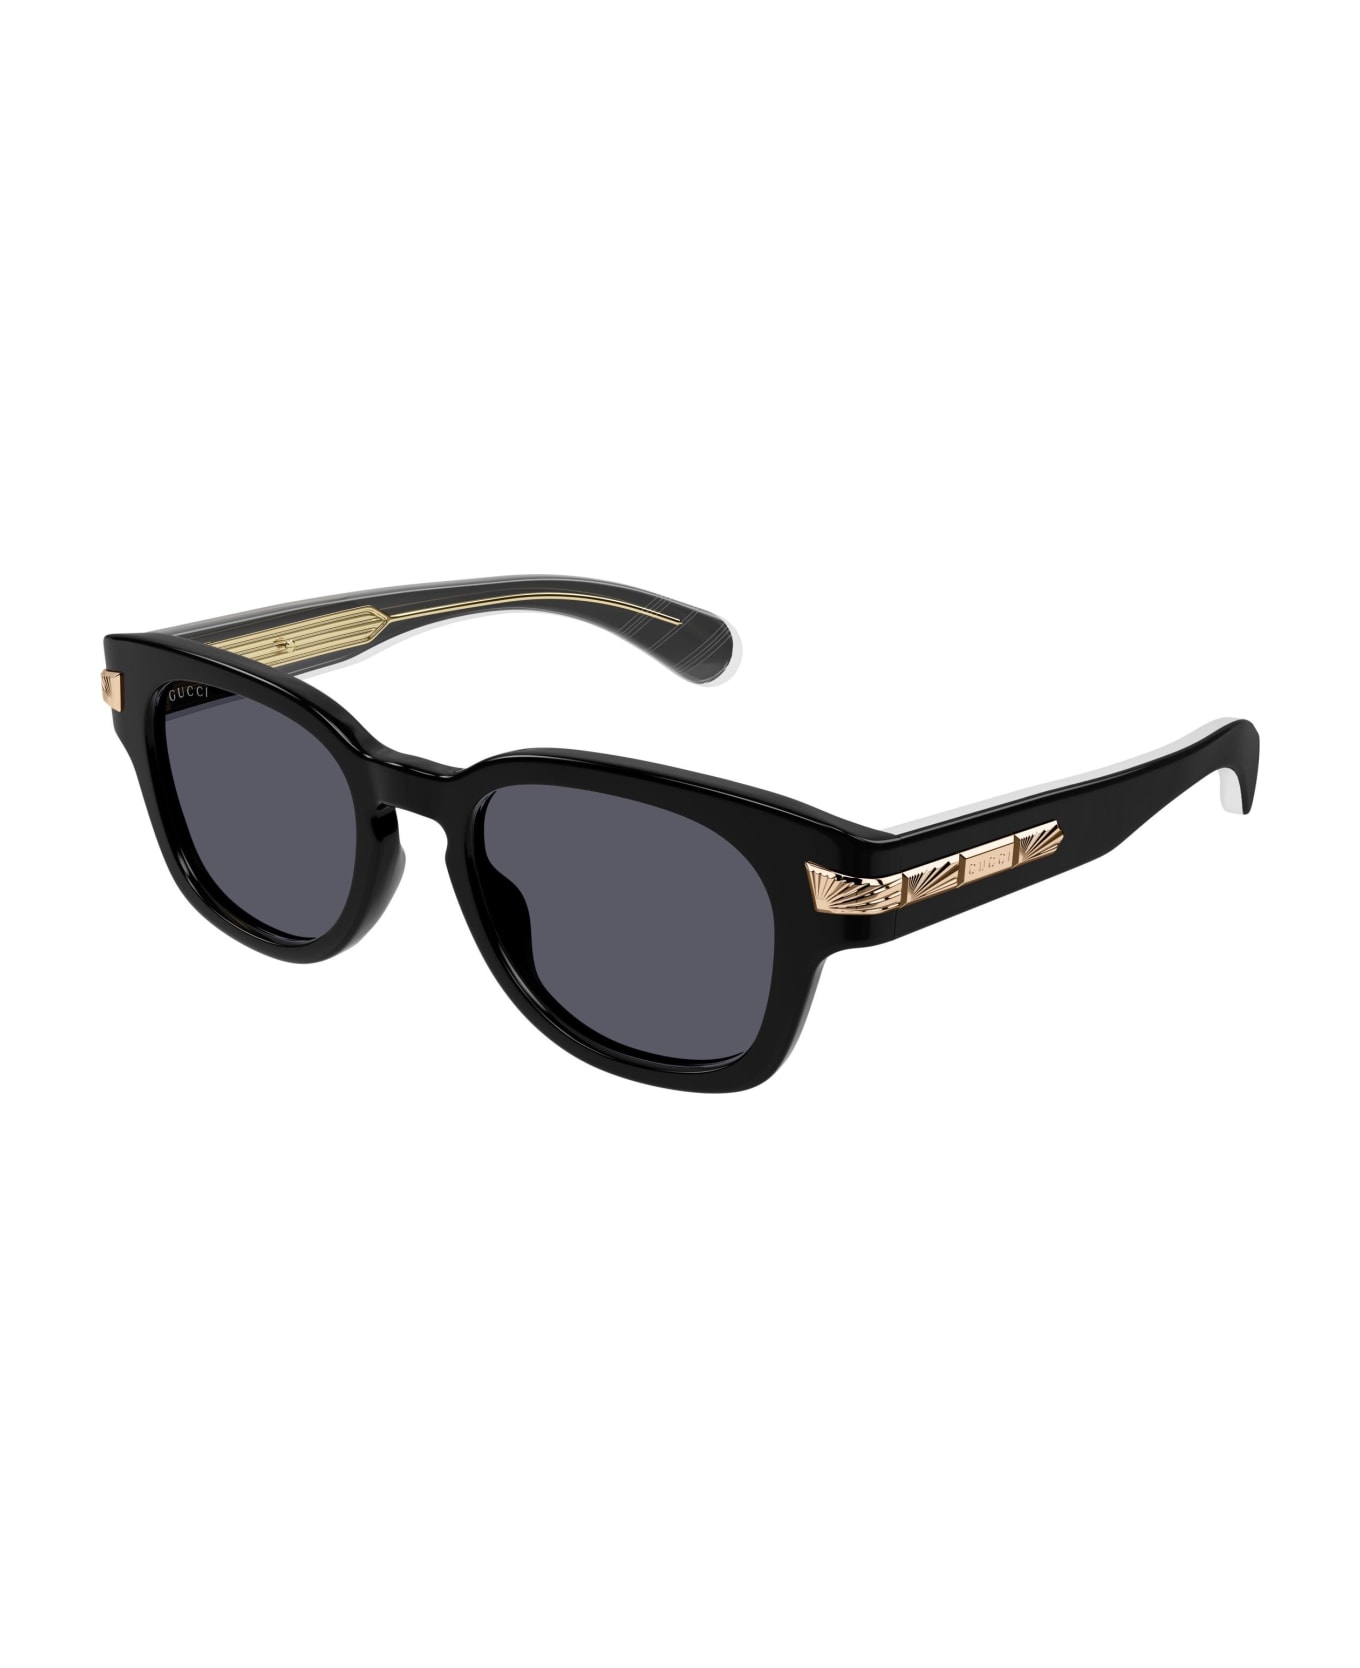 Gucci Eyewear Sunglasses - Nero/Grigio